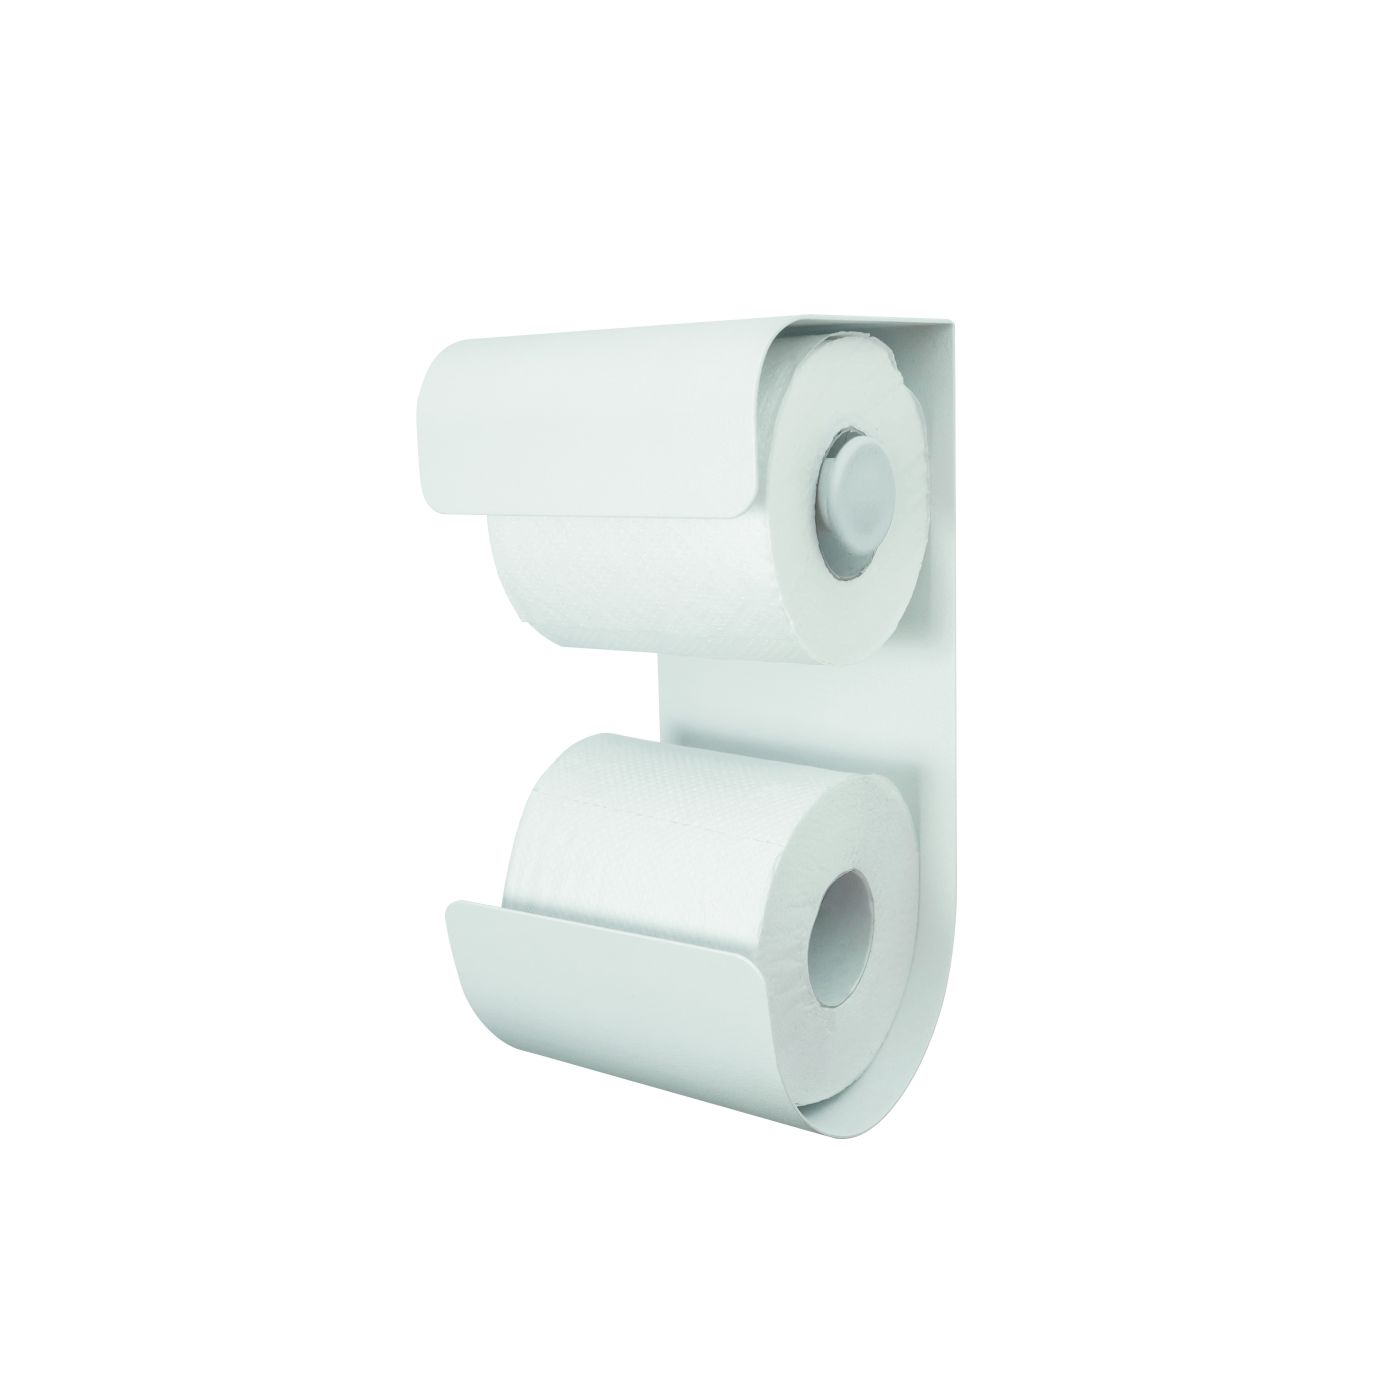 Sealskin Brix metalen toiletrolhouder 12.5x11.6x25.5 cm wit